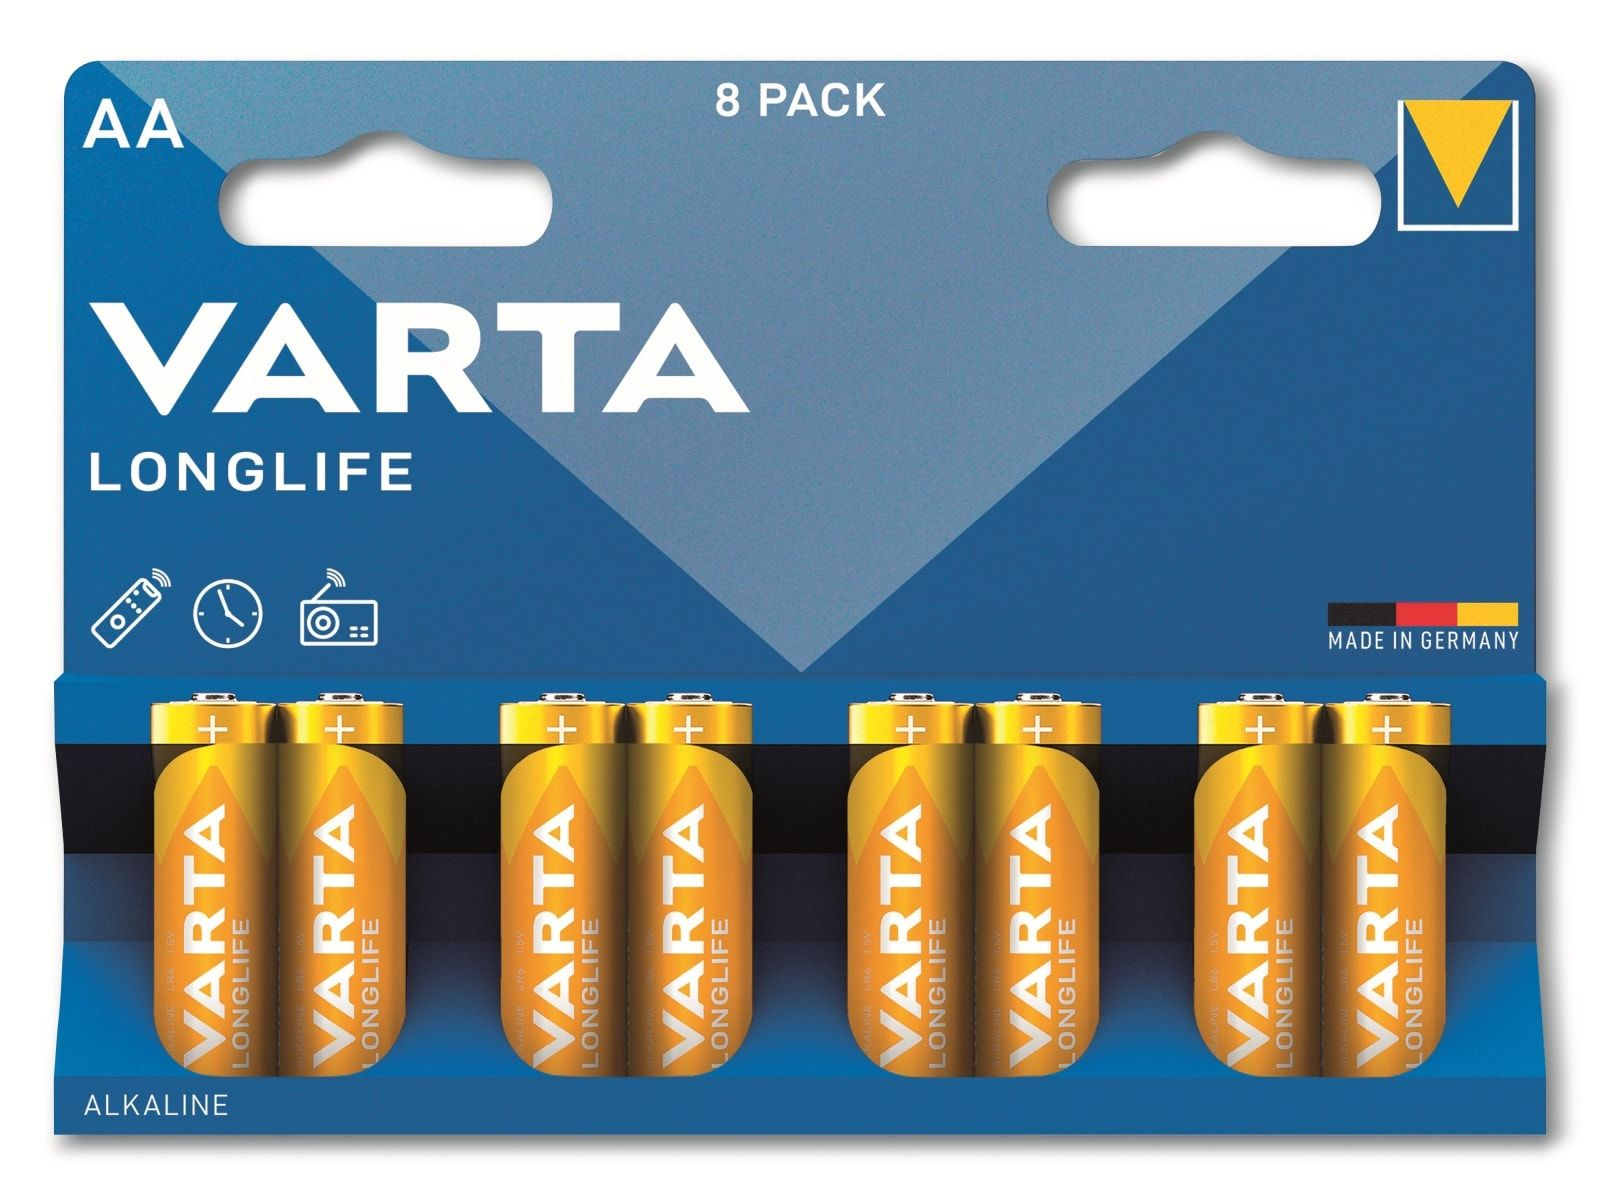 VARTA Batterie Alkaline, LR06, Batterie Longlife, 8 Stück AA, Mignon, 1.5V, Alkaline